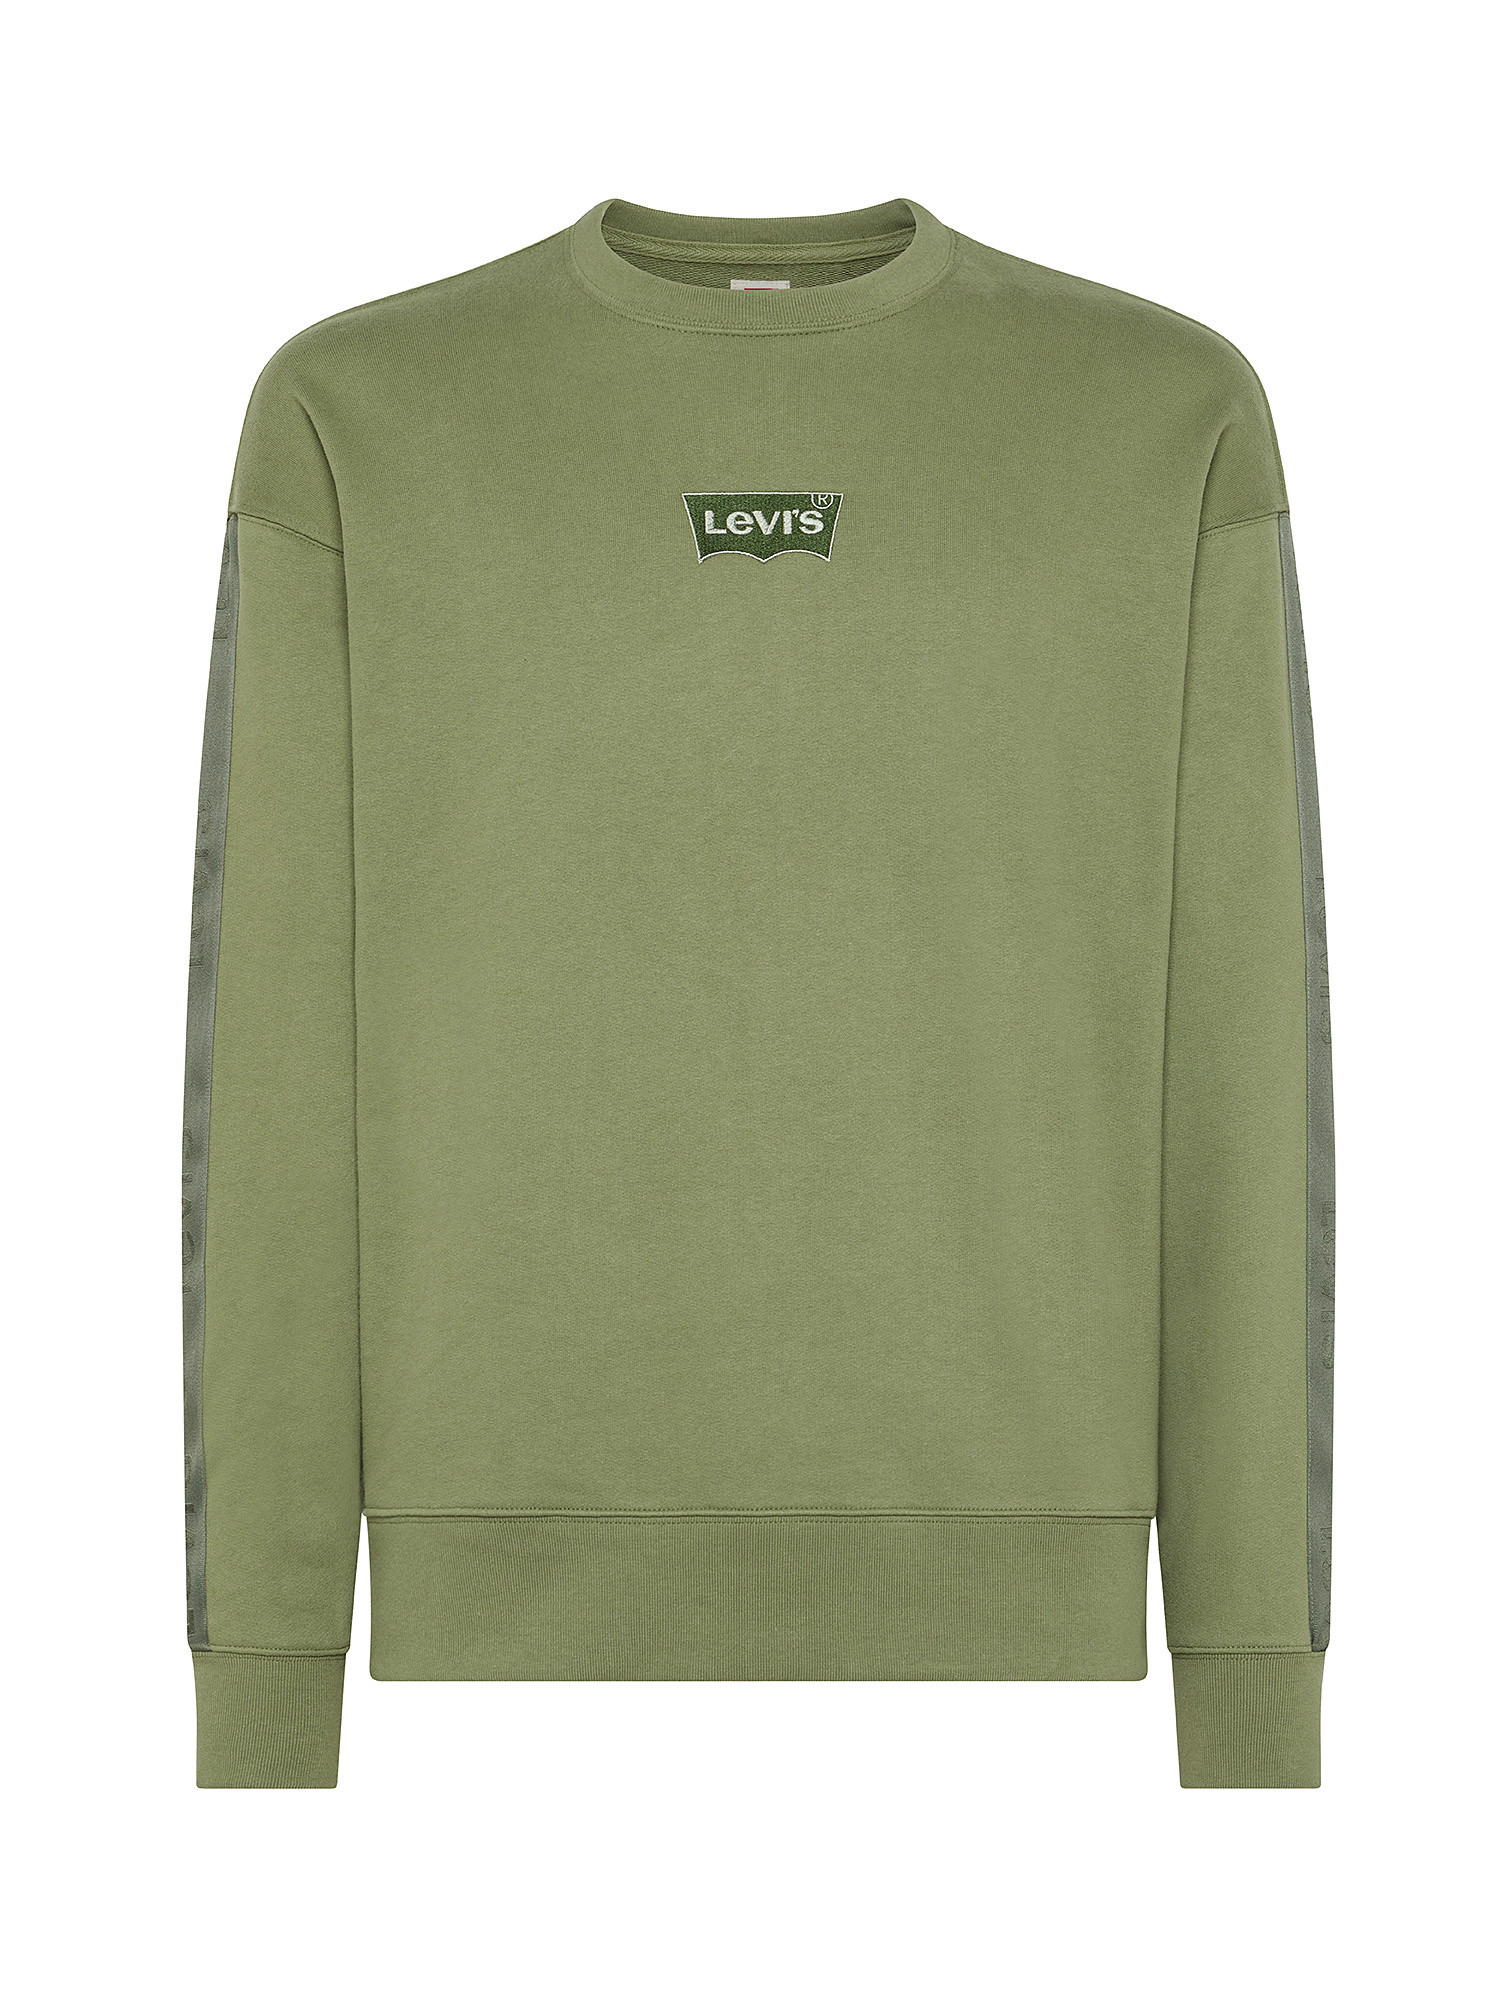 Levi's - Felpa in cotone con logo, Verde chiaro, large image number 0